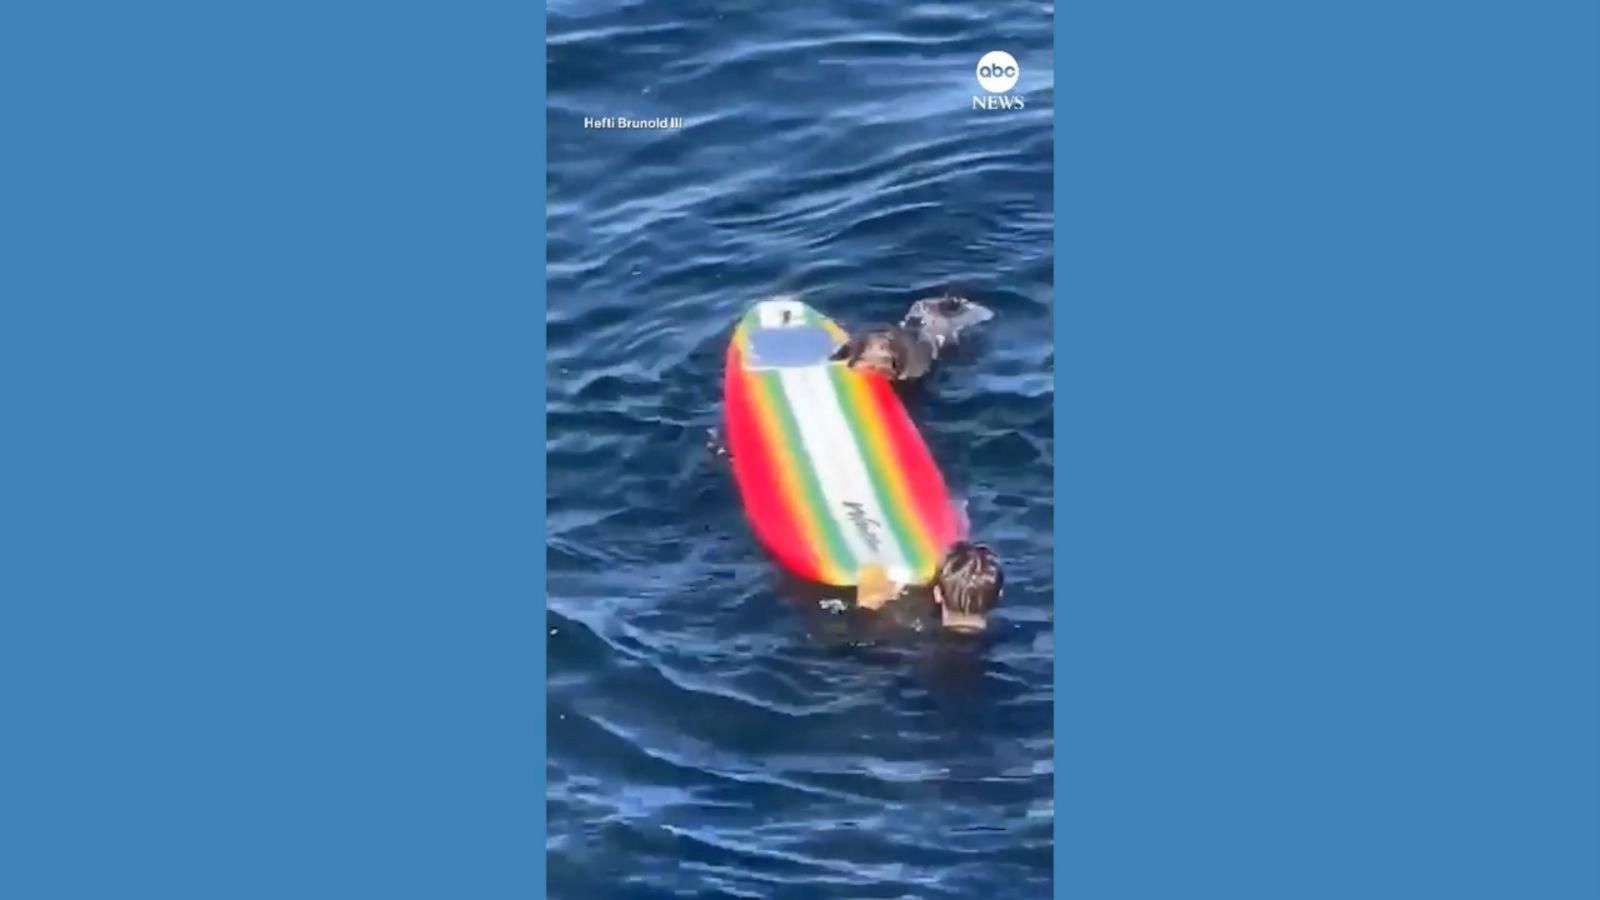 Otter commandeers surfboard off California coast - Good Morning America